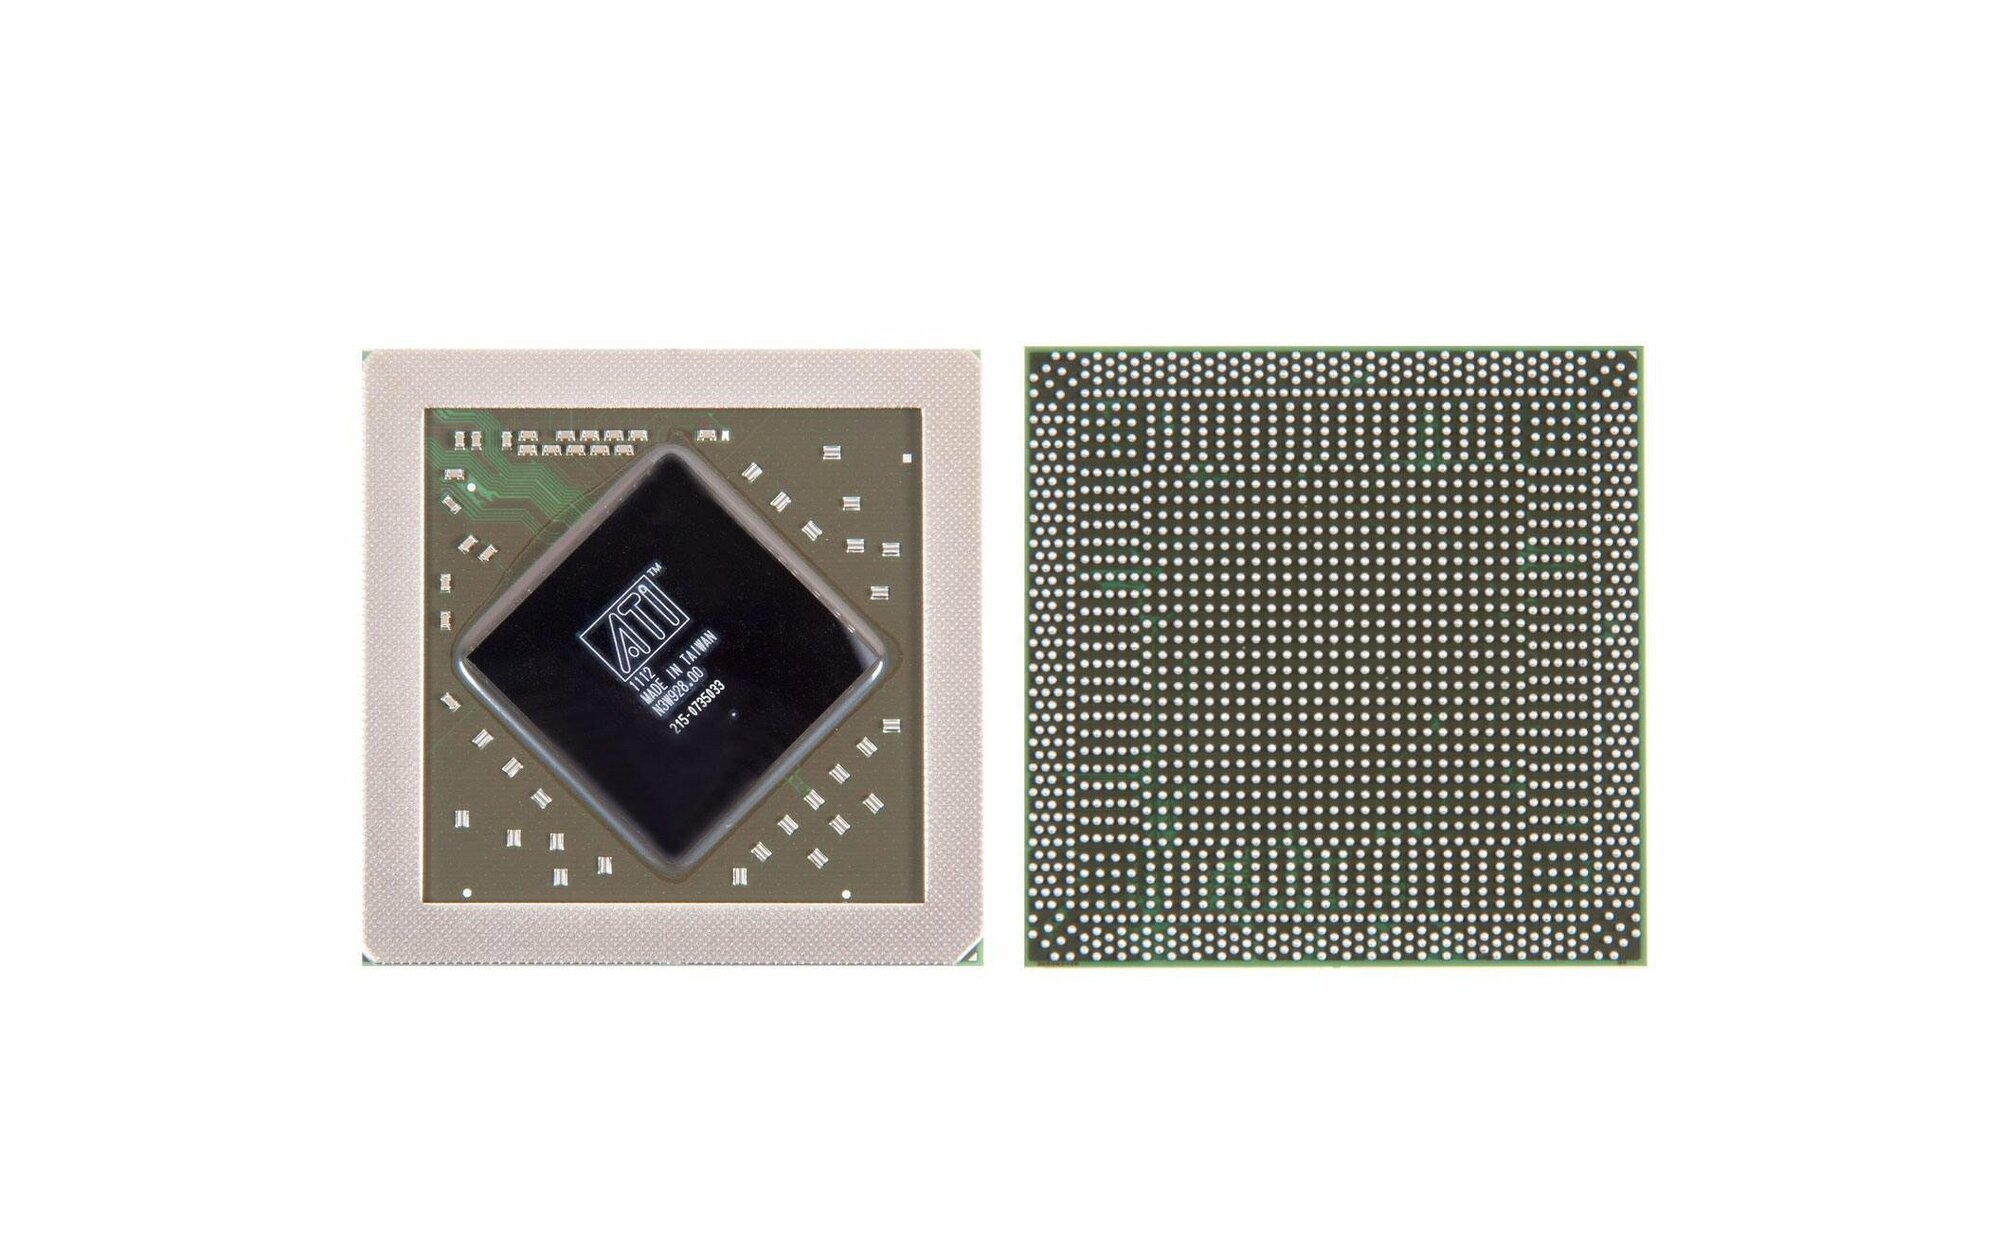 Видеочип AMD Mobility Radeon (video chip) HD5870, 215-0735033